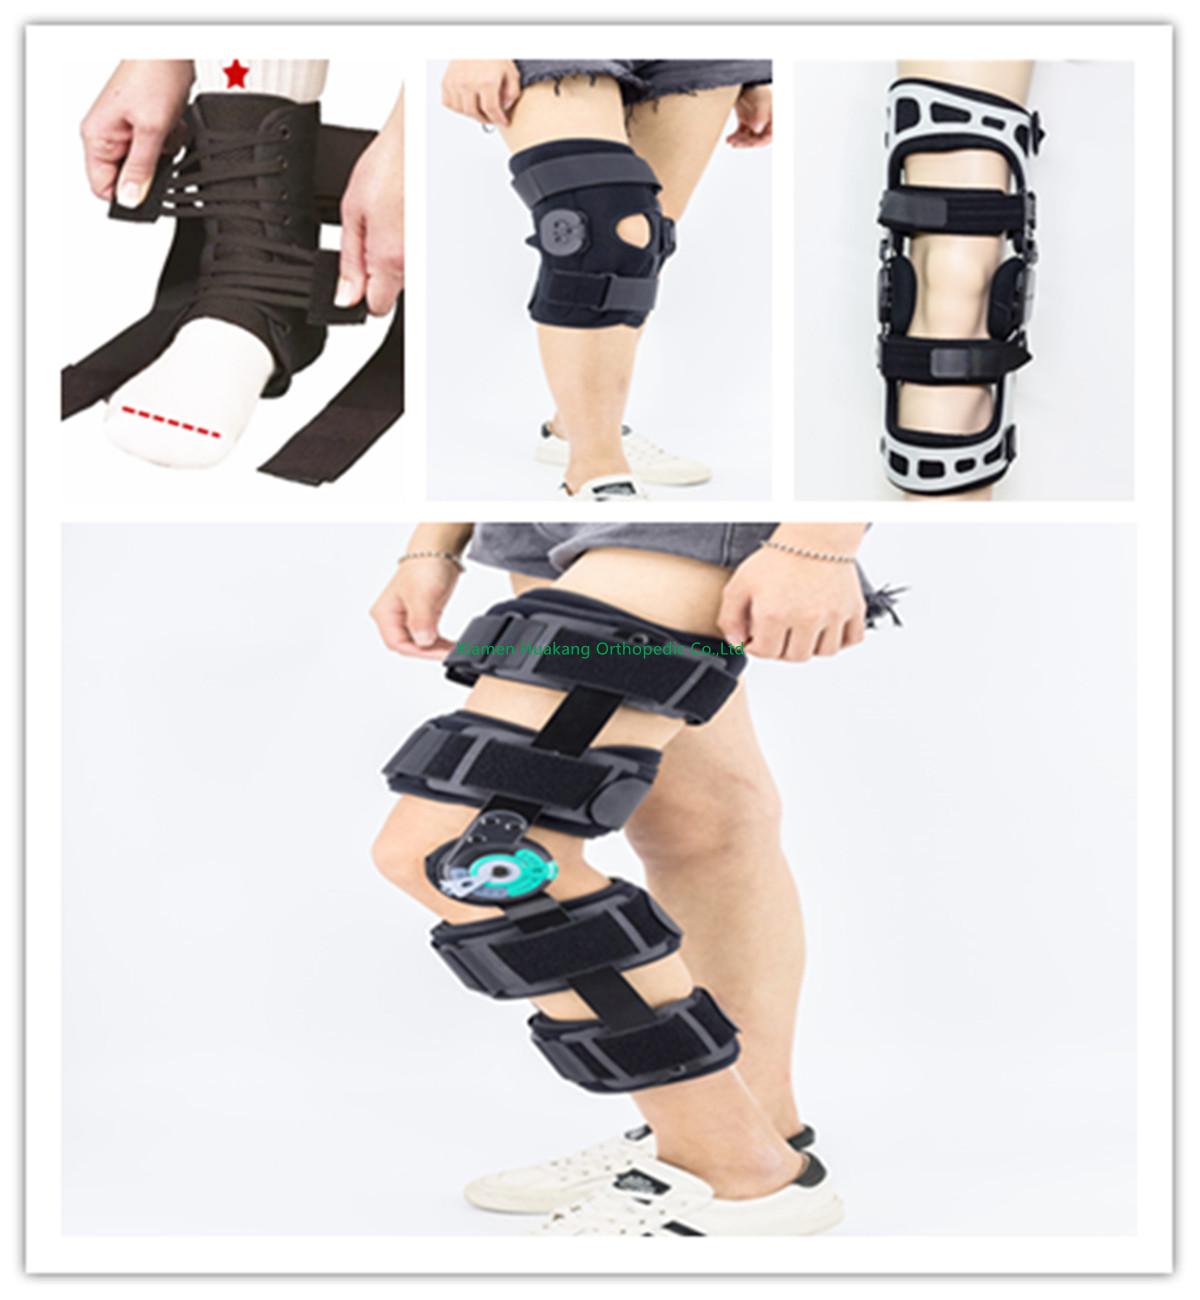 ROM hinged OA knee support brace